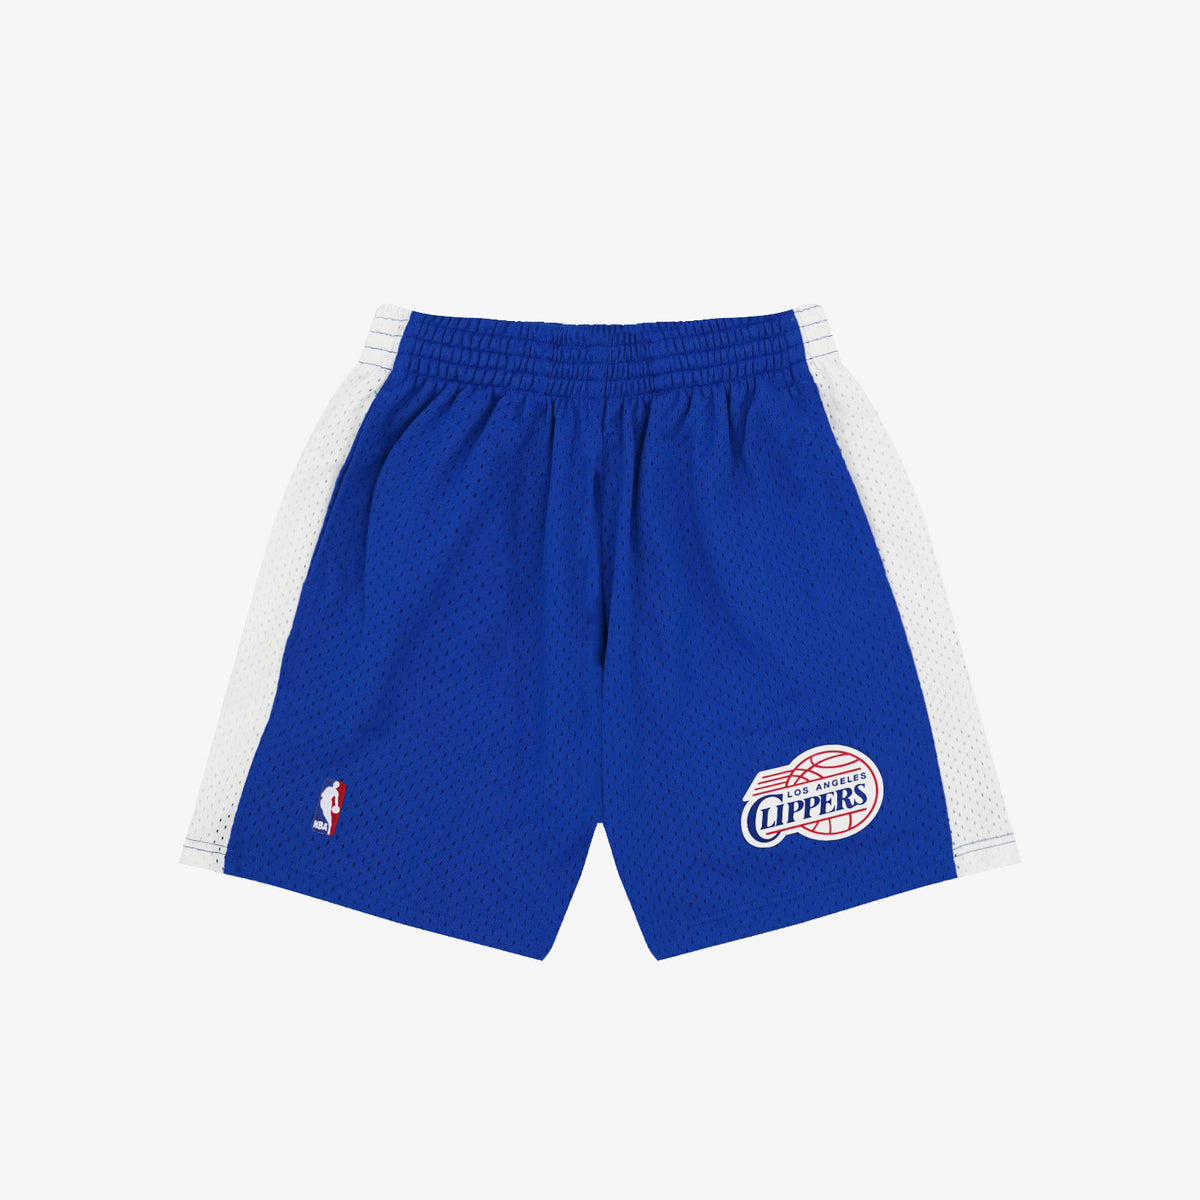 Los Angeles Clippers 02-03 HWC Swingman Shorts - Blue